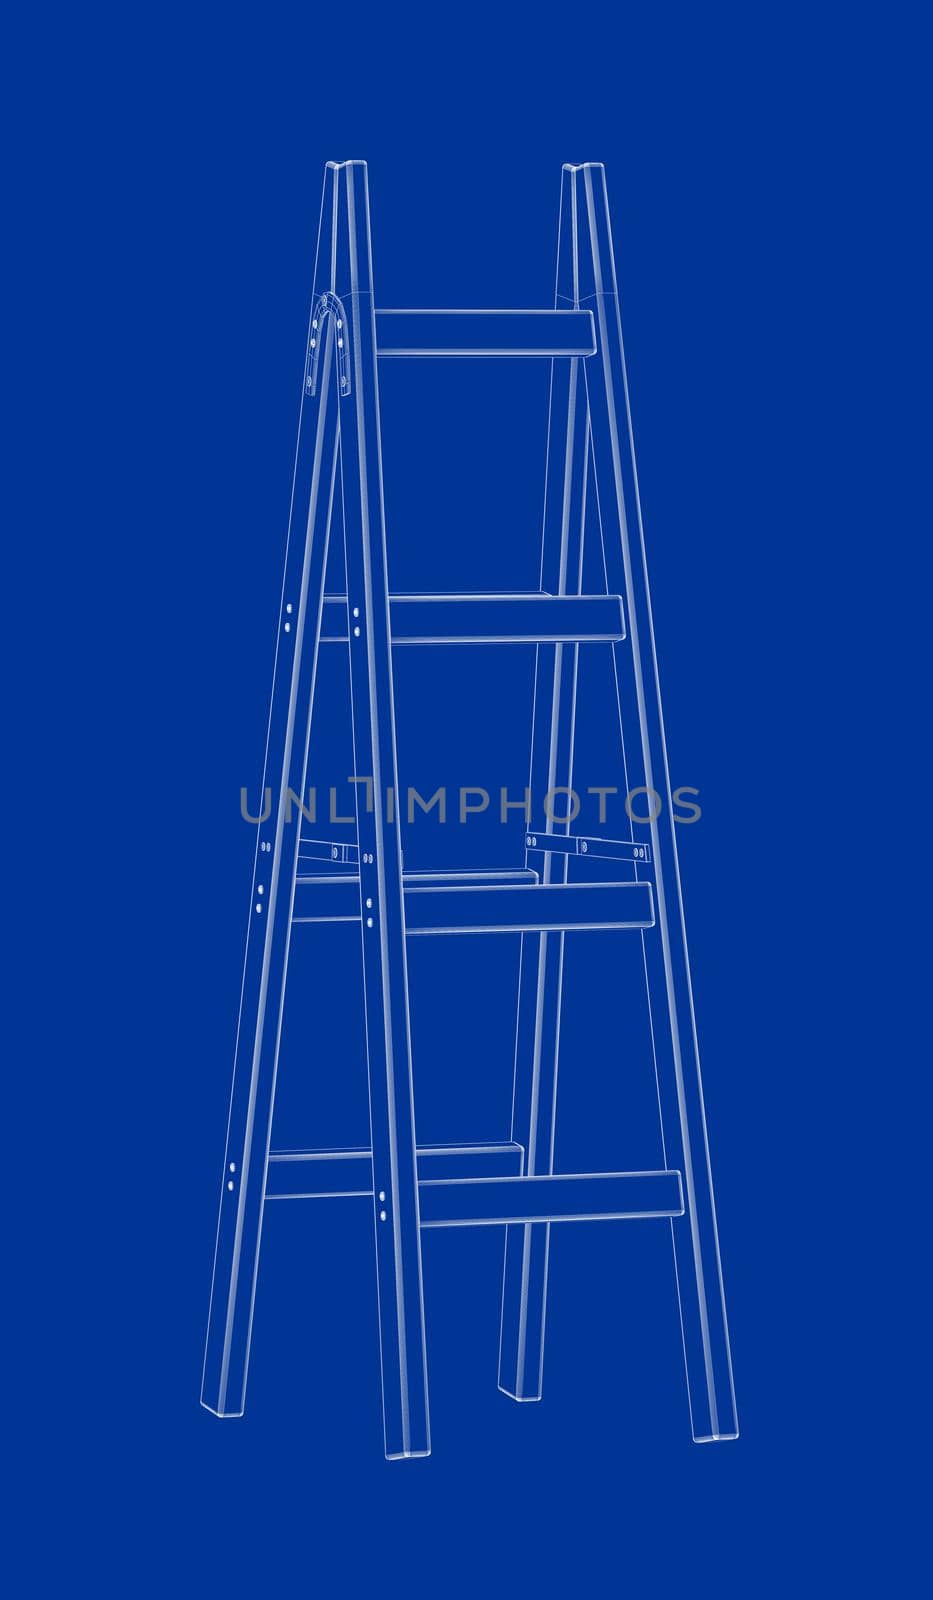 3d wire-frame model of ladder on blue background